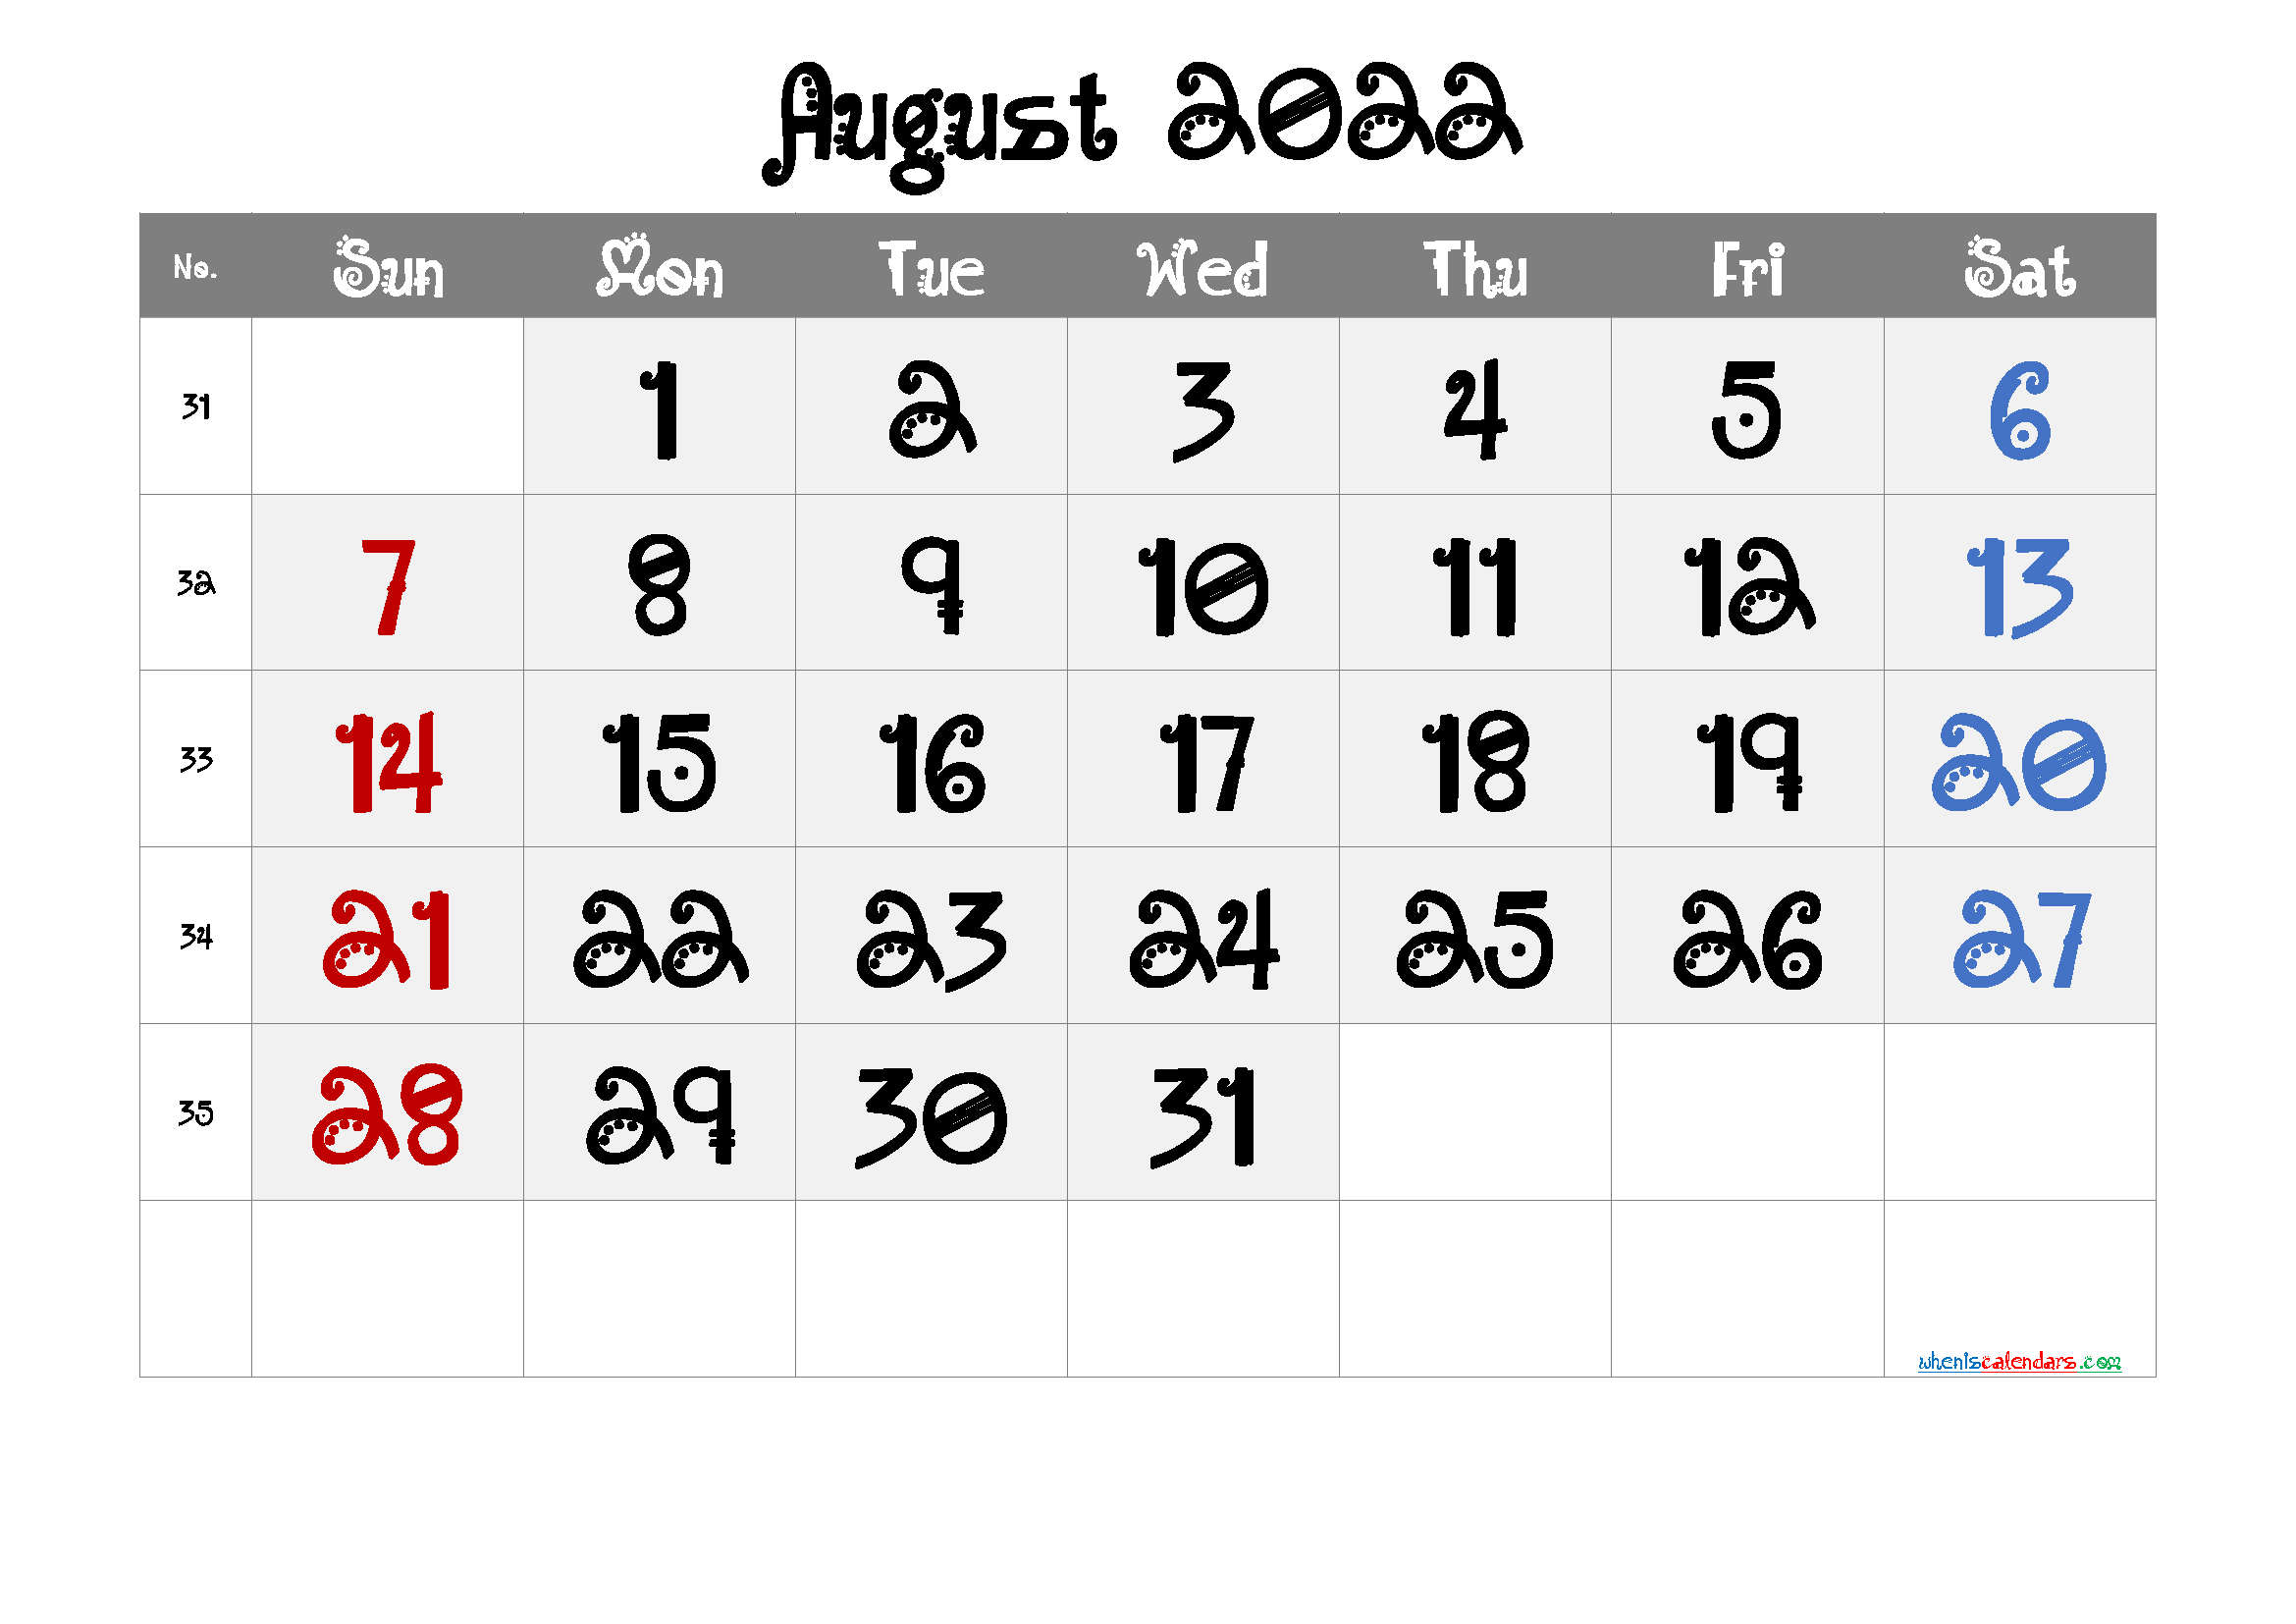 August 2022 Calendar with Holidays